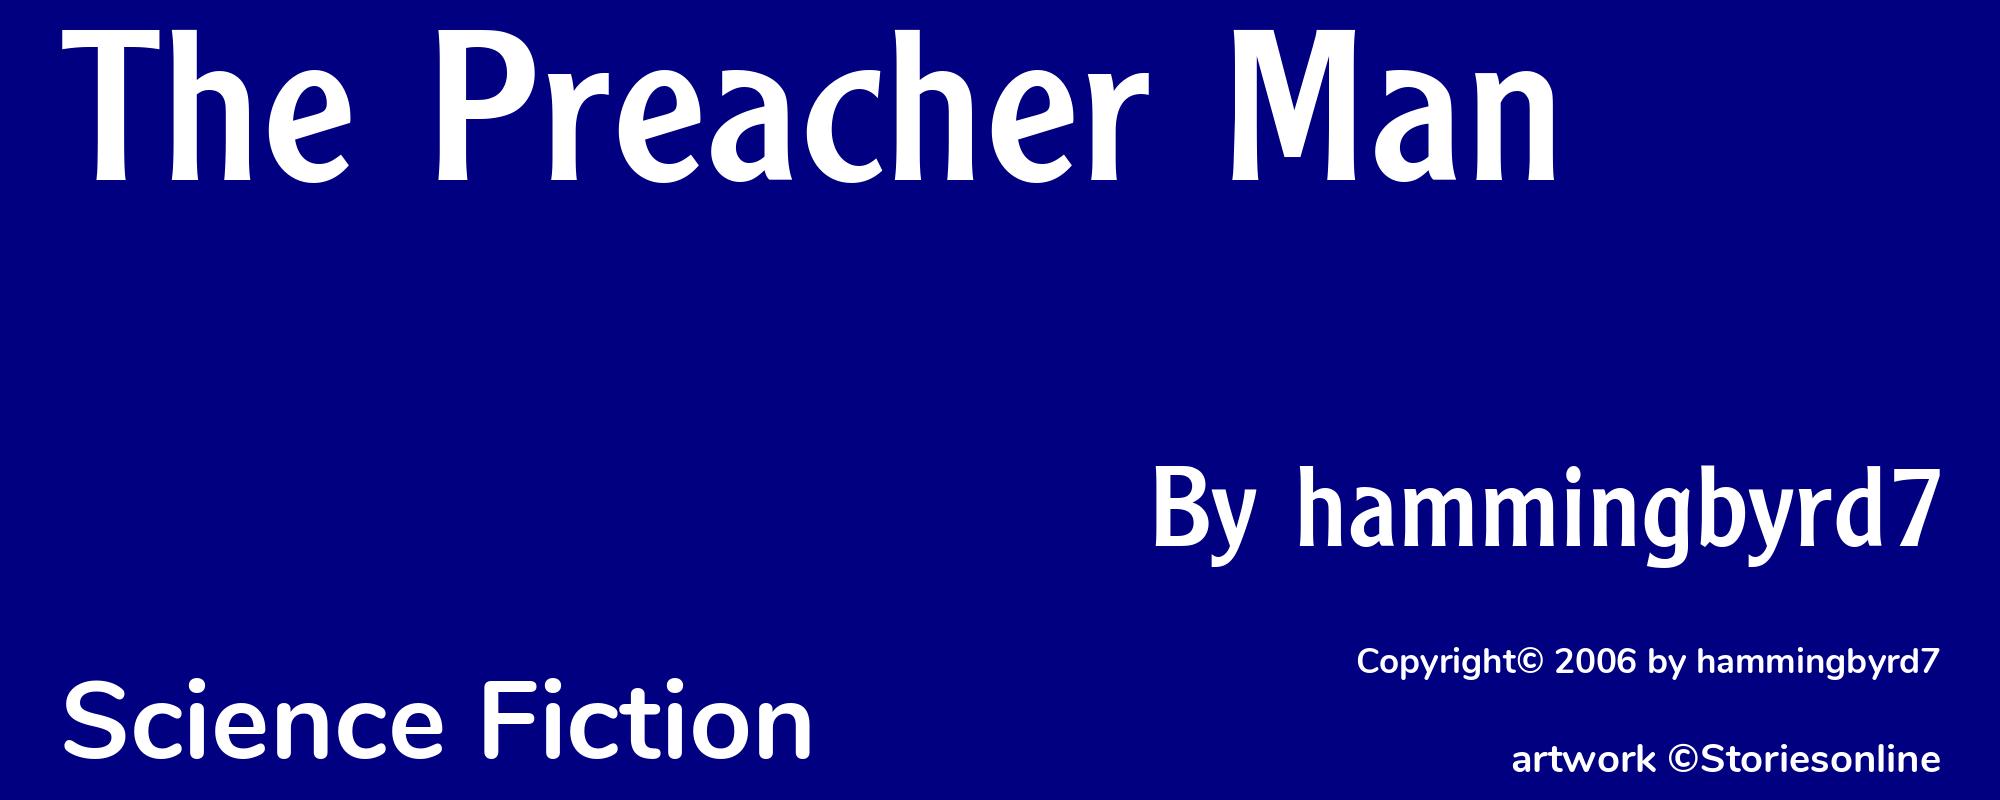 The Preacher Man - Cover